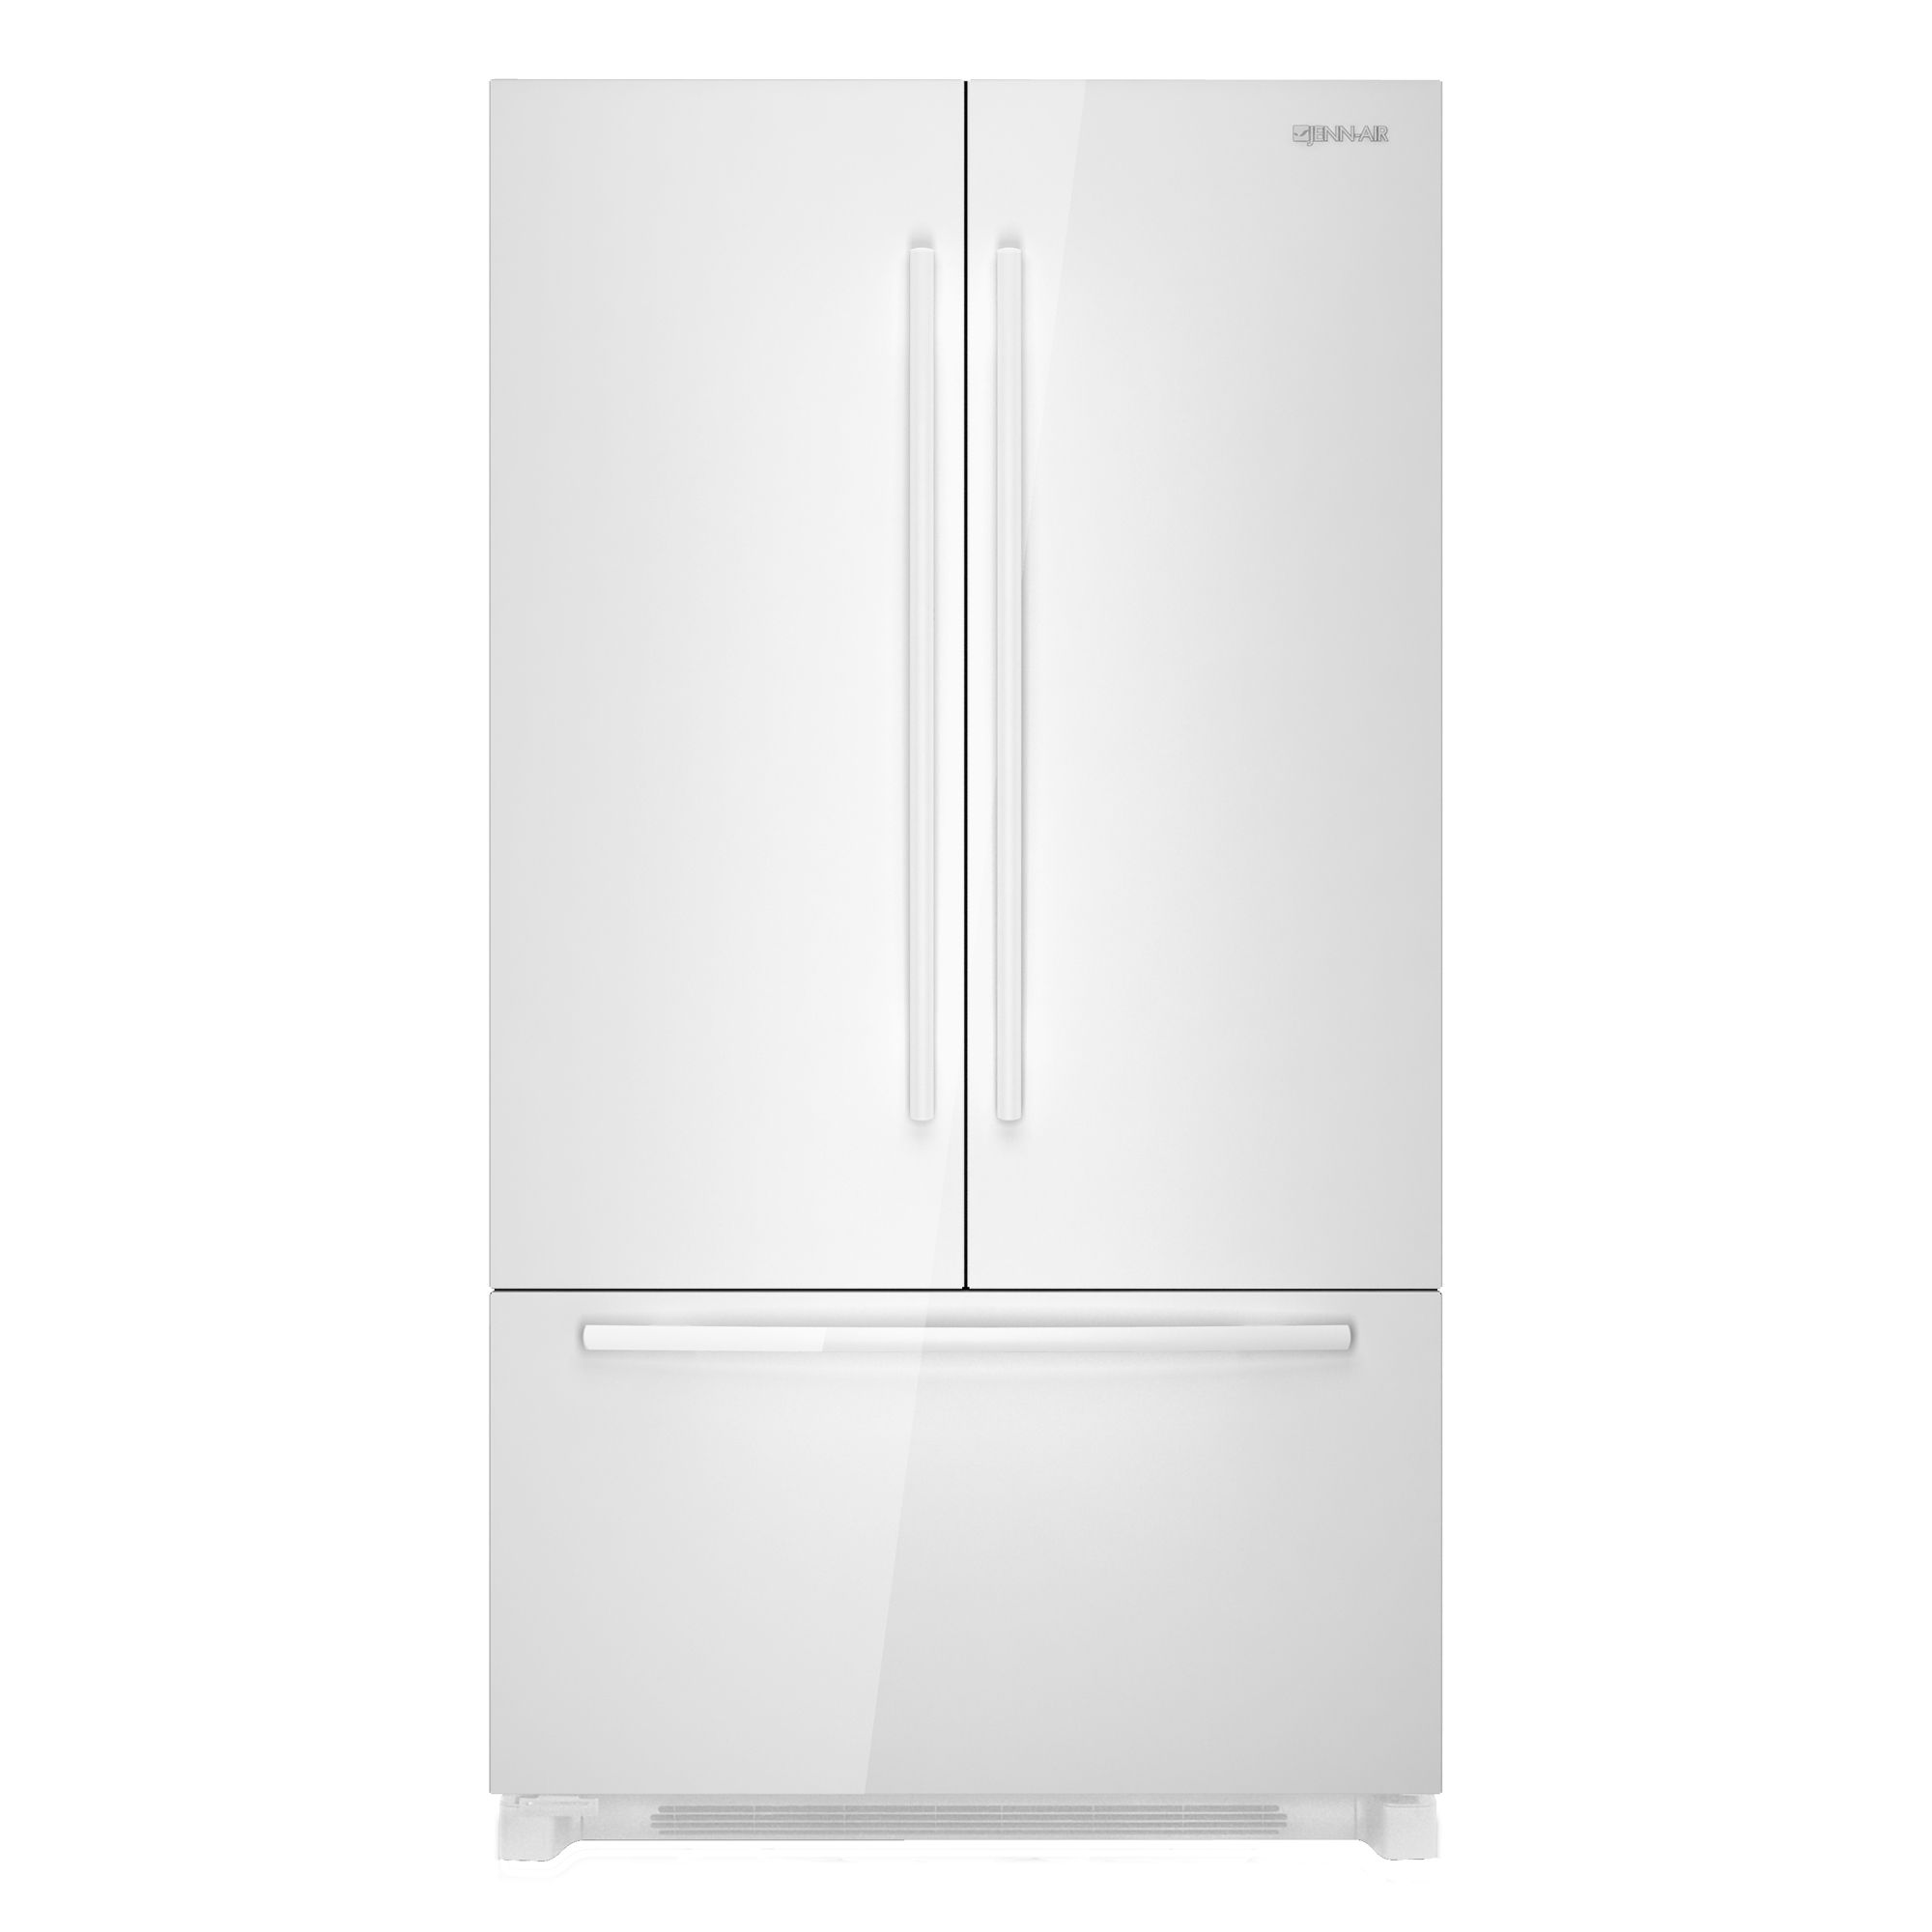 Jenn-Air JFC2290VPF 21.8 cu. ft. Built-In French-Door Refrigerator w/ Internal Water Dispenser - White